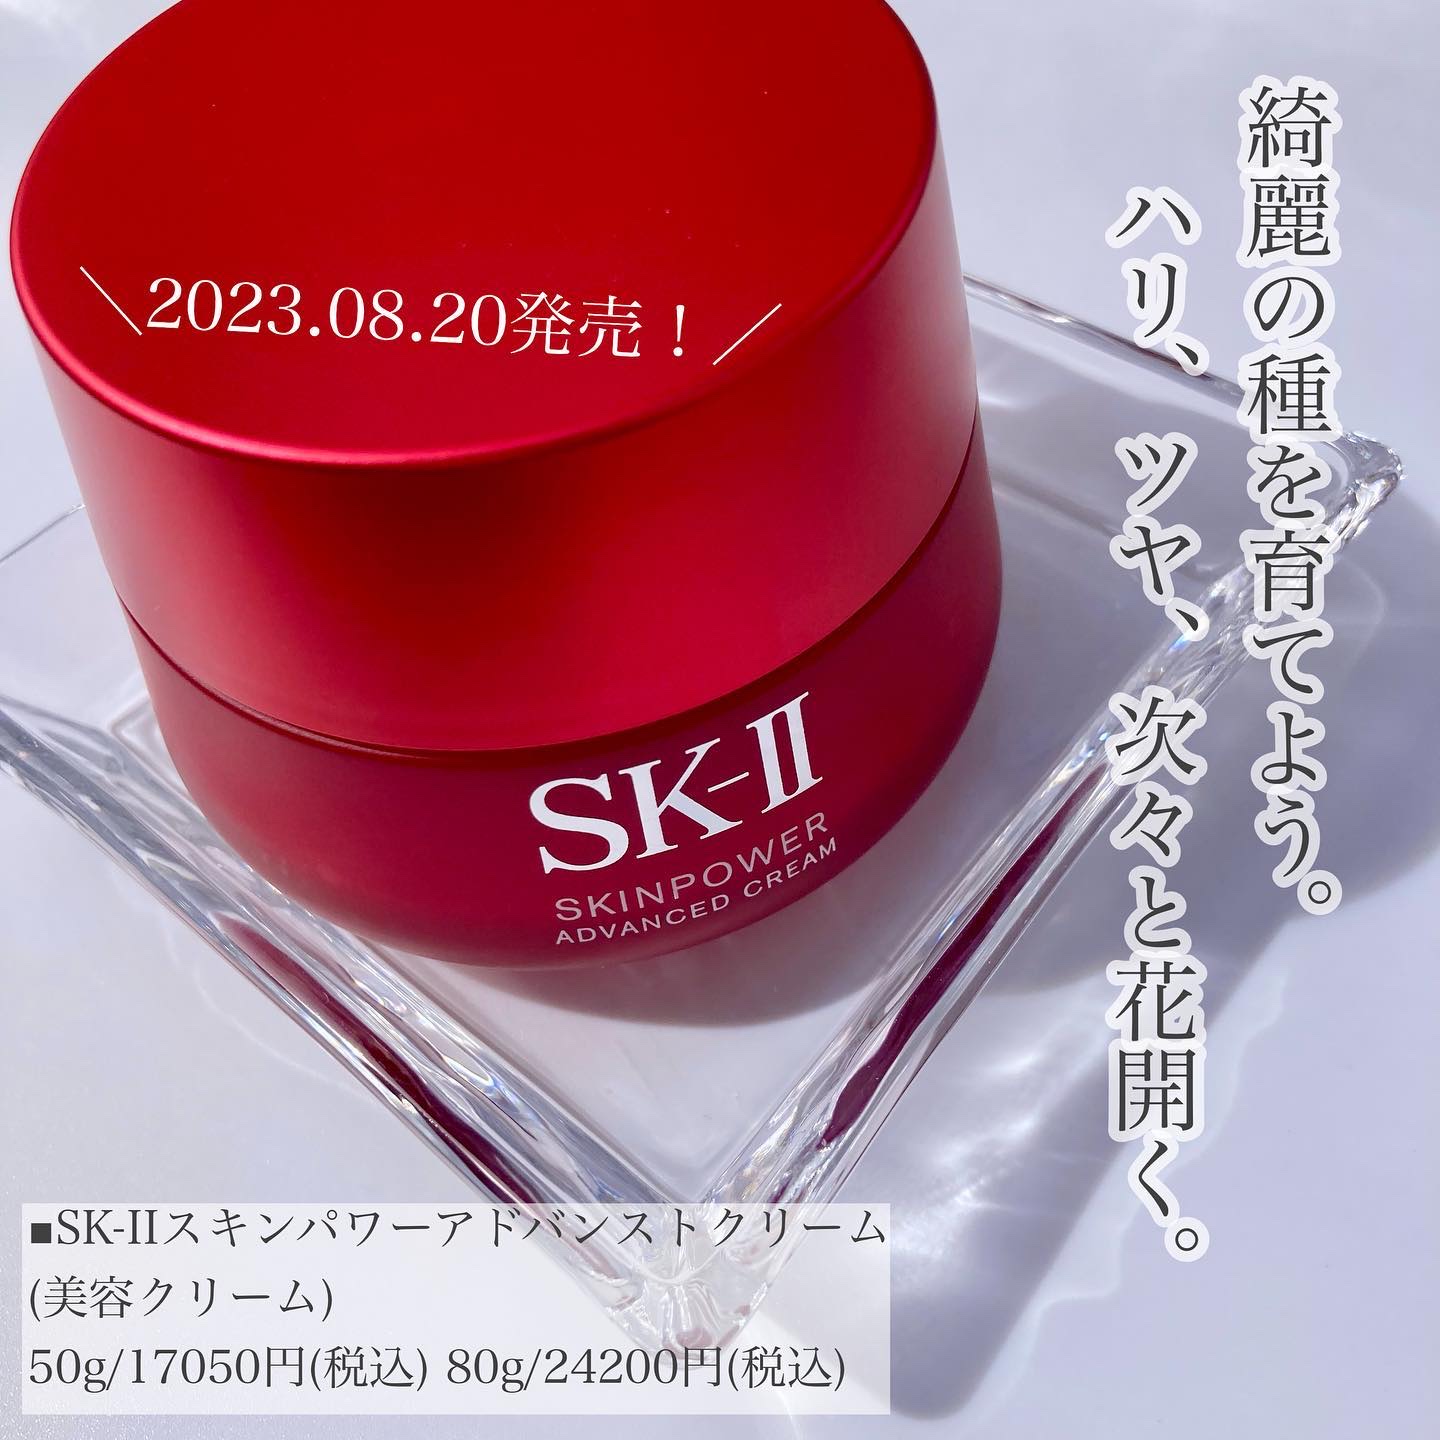 SK-II スキンパワークリーム美容クリーム50g